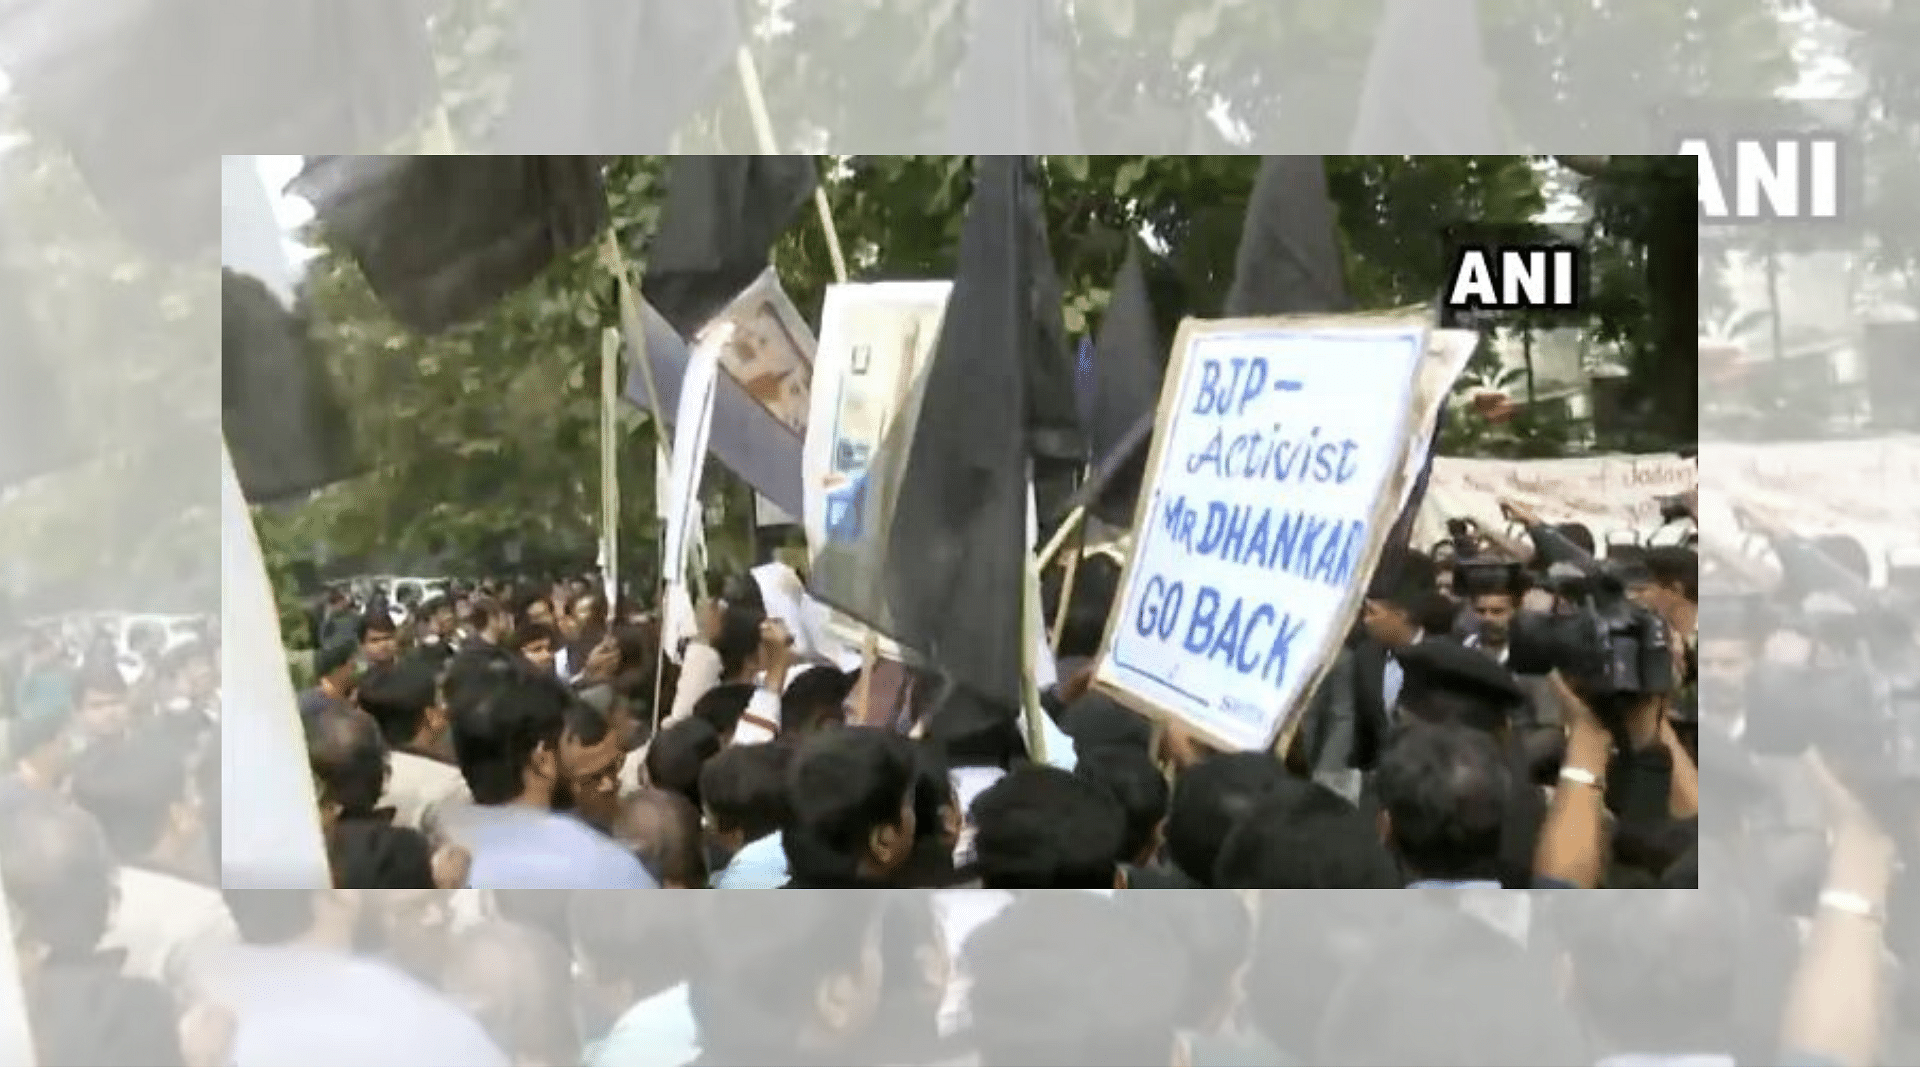 Jadavpur University students held placards with ‘BJP Activist Mr Dhankar Go Back.’